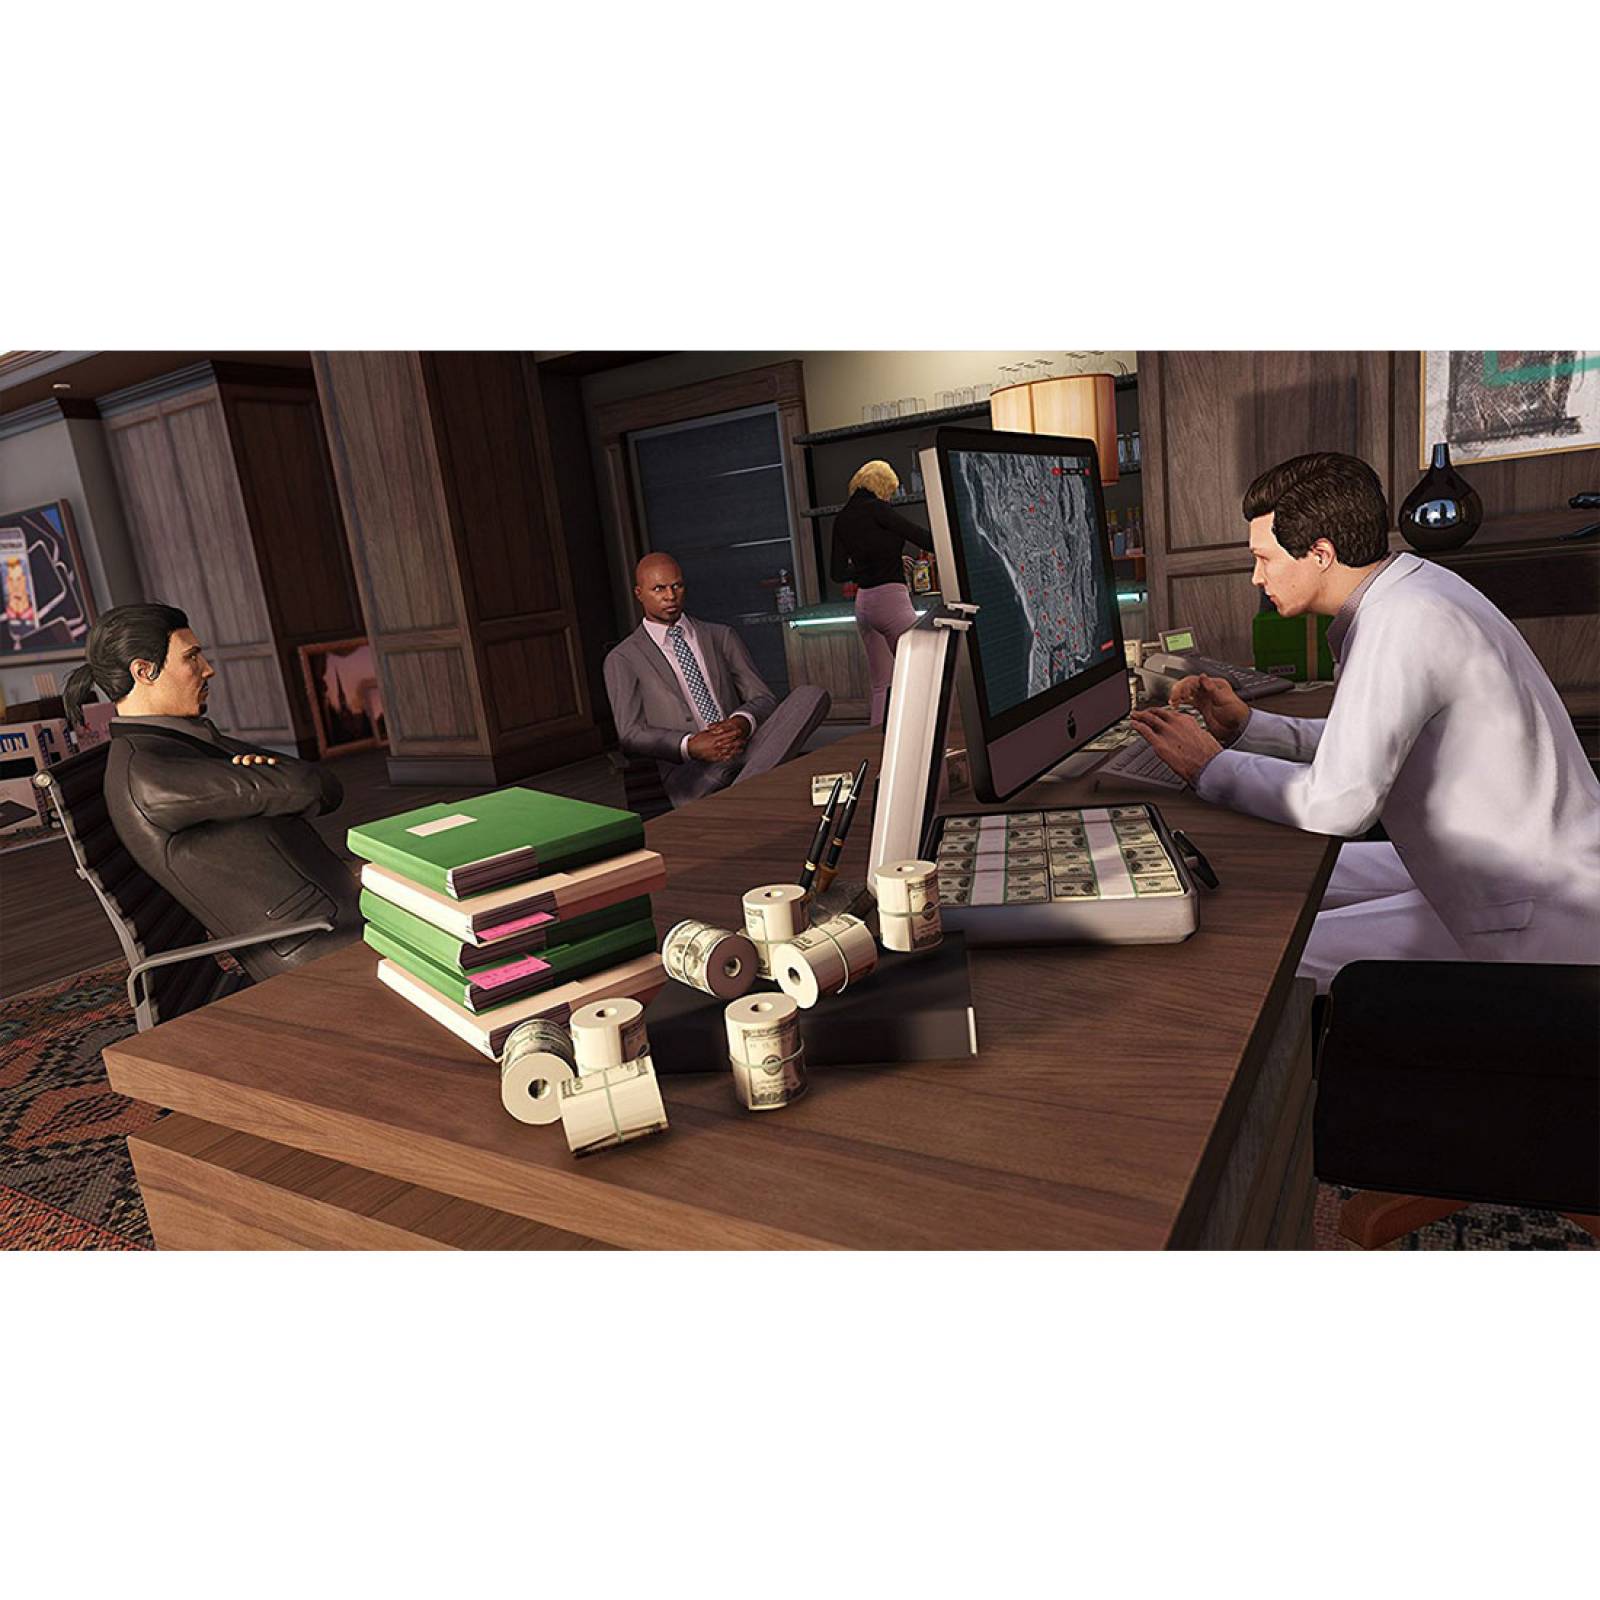 Juego GTA Premium Edition W Criminal Xbox One Ibushak Gaming